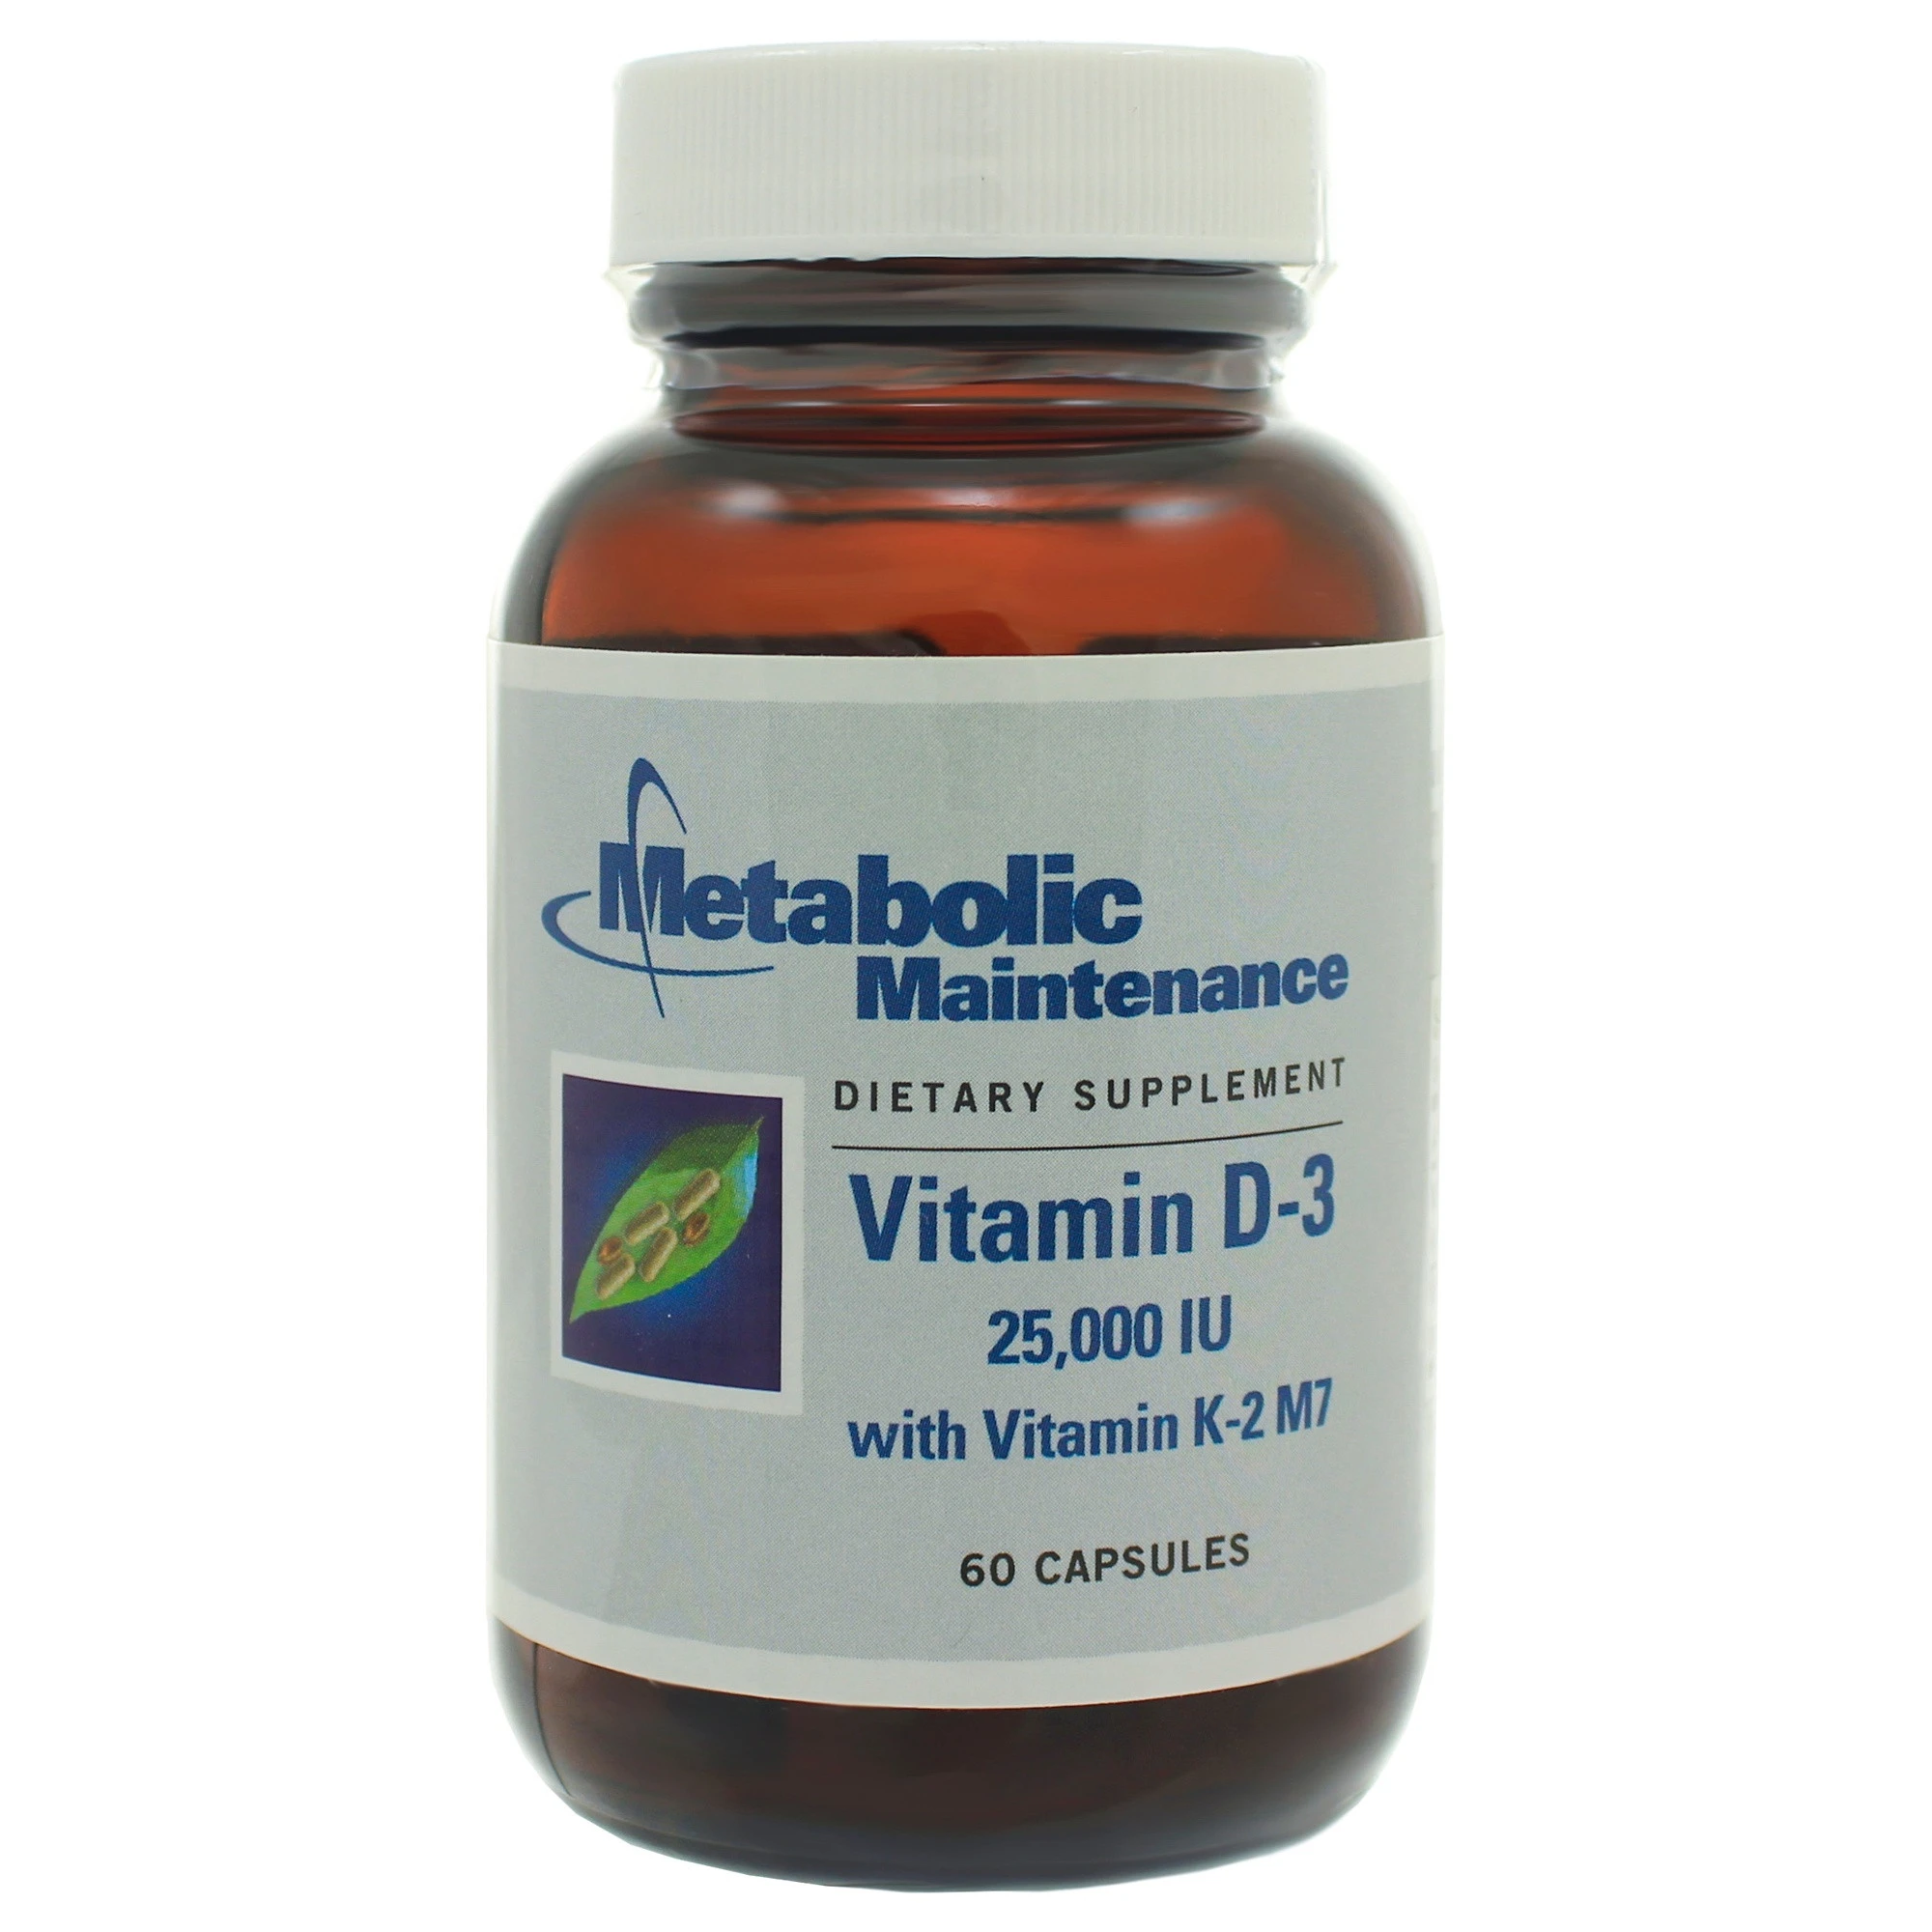 Vitamin D3 25,000 IU